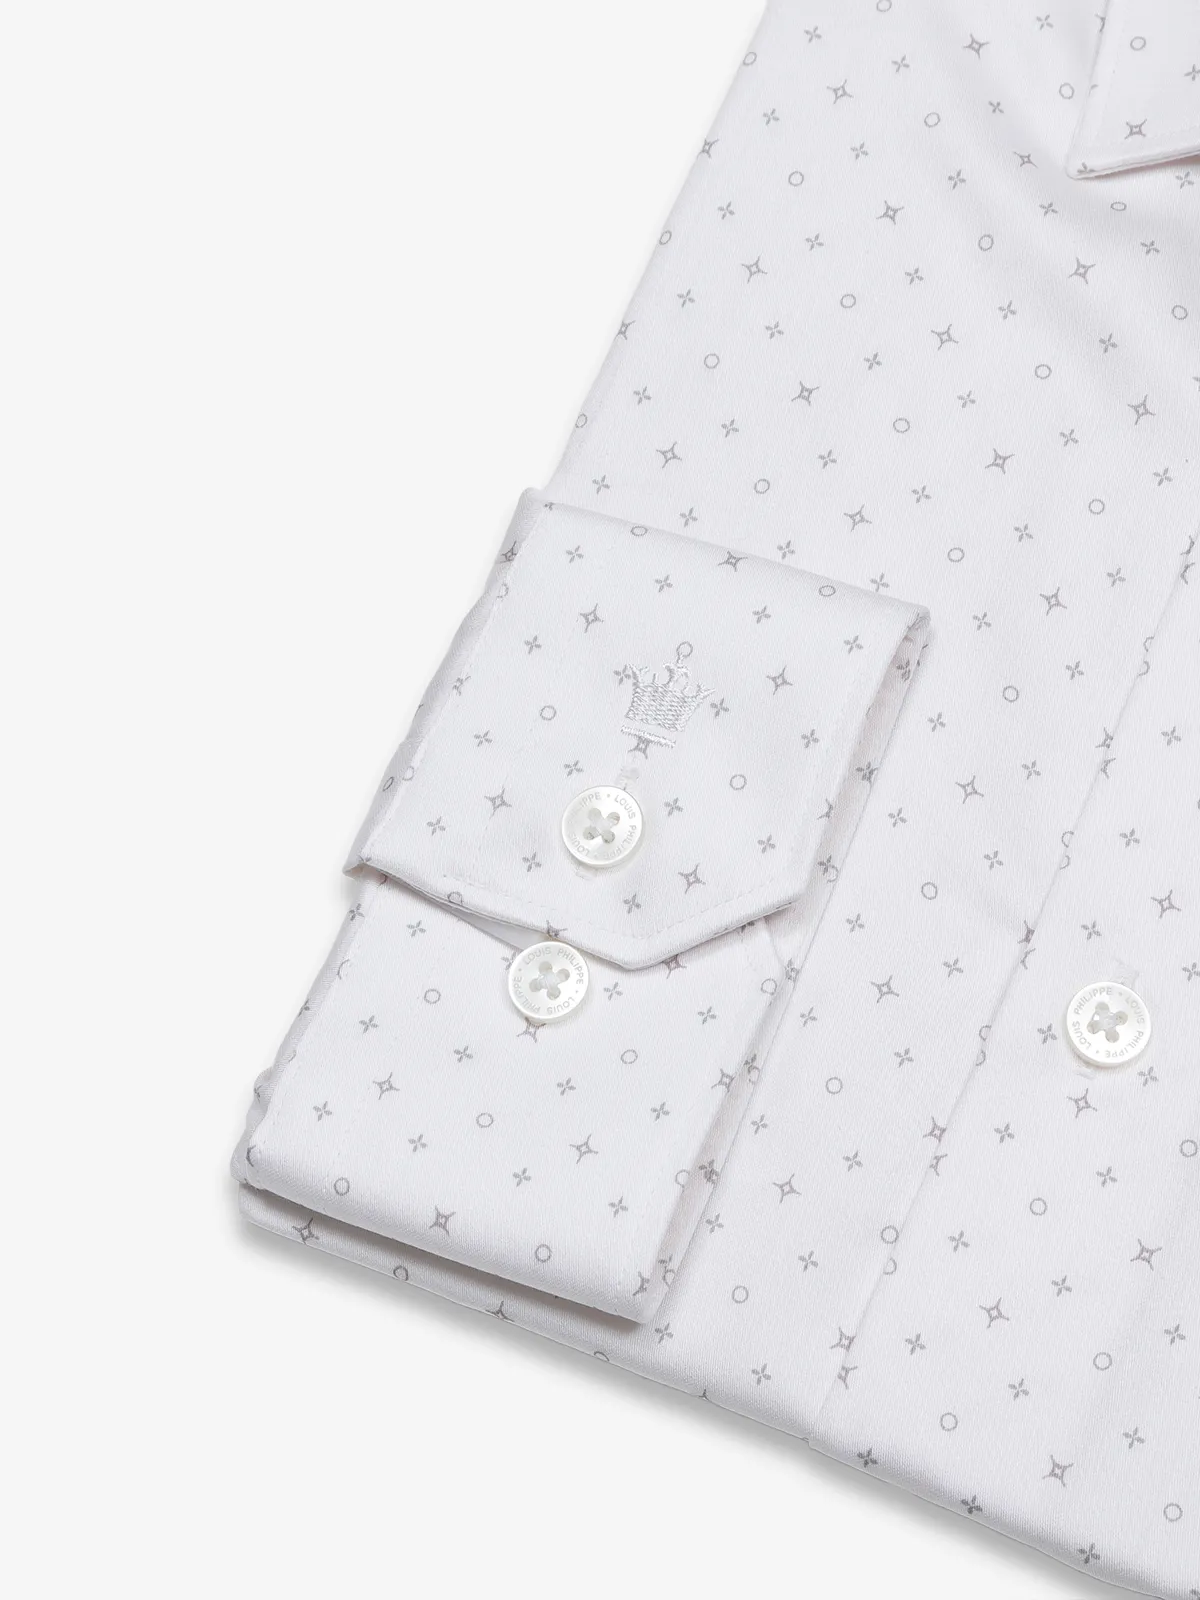 Louis Philippe white cotton printed shirt